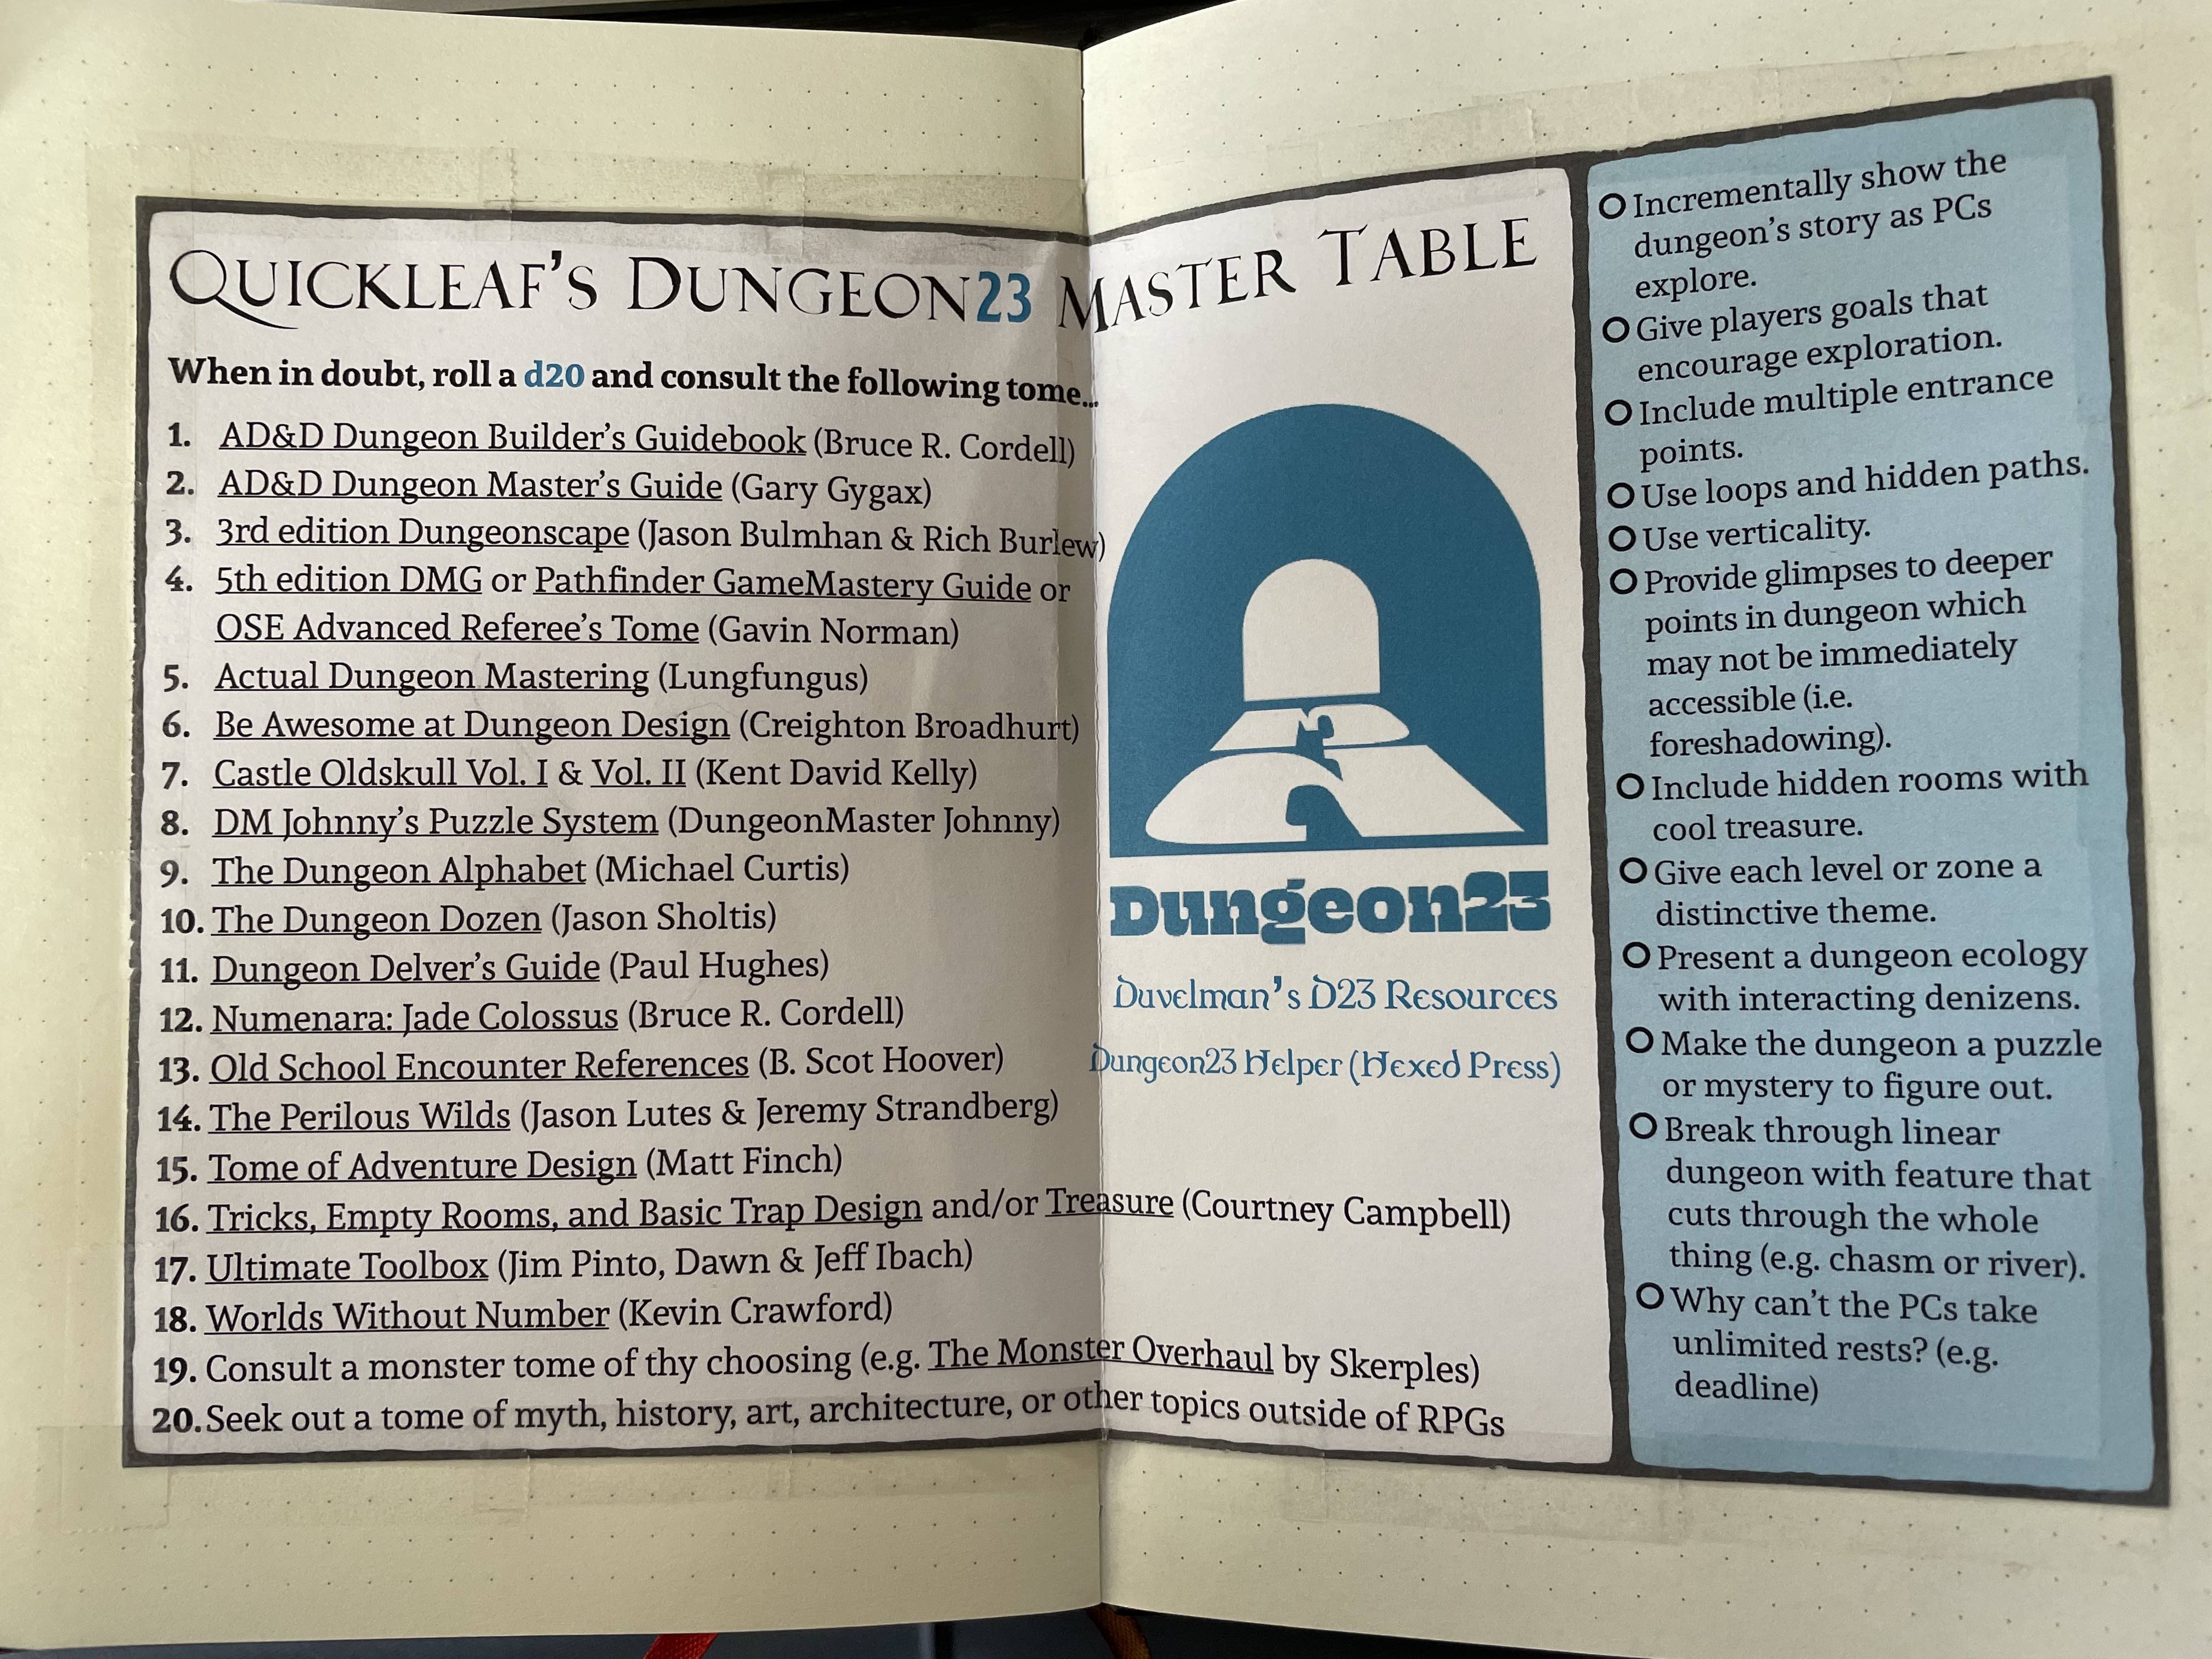 00_quickleafs dungeon23 master table.jpg